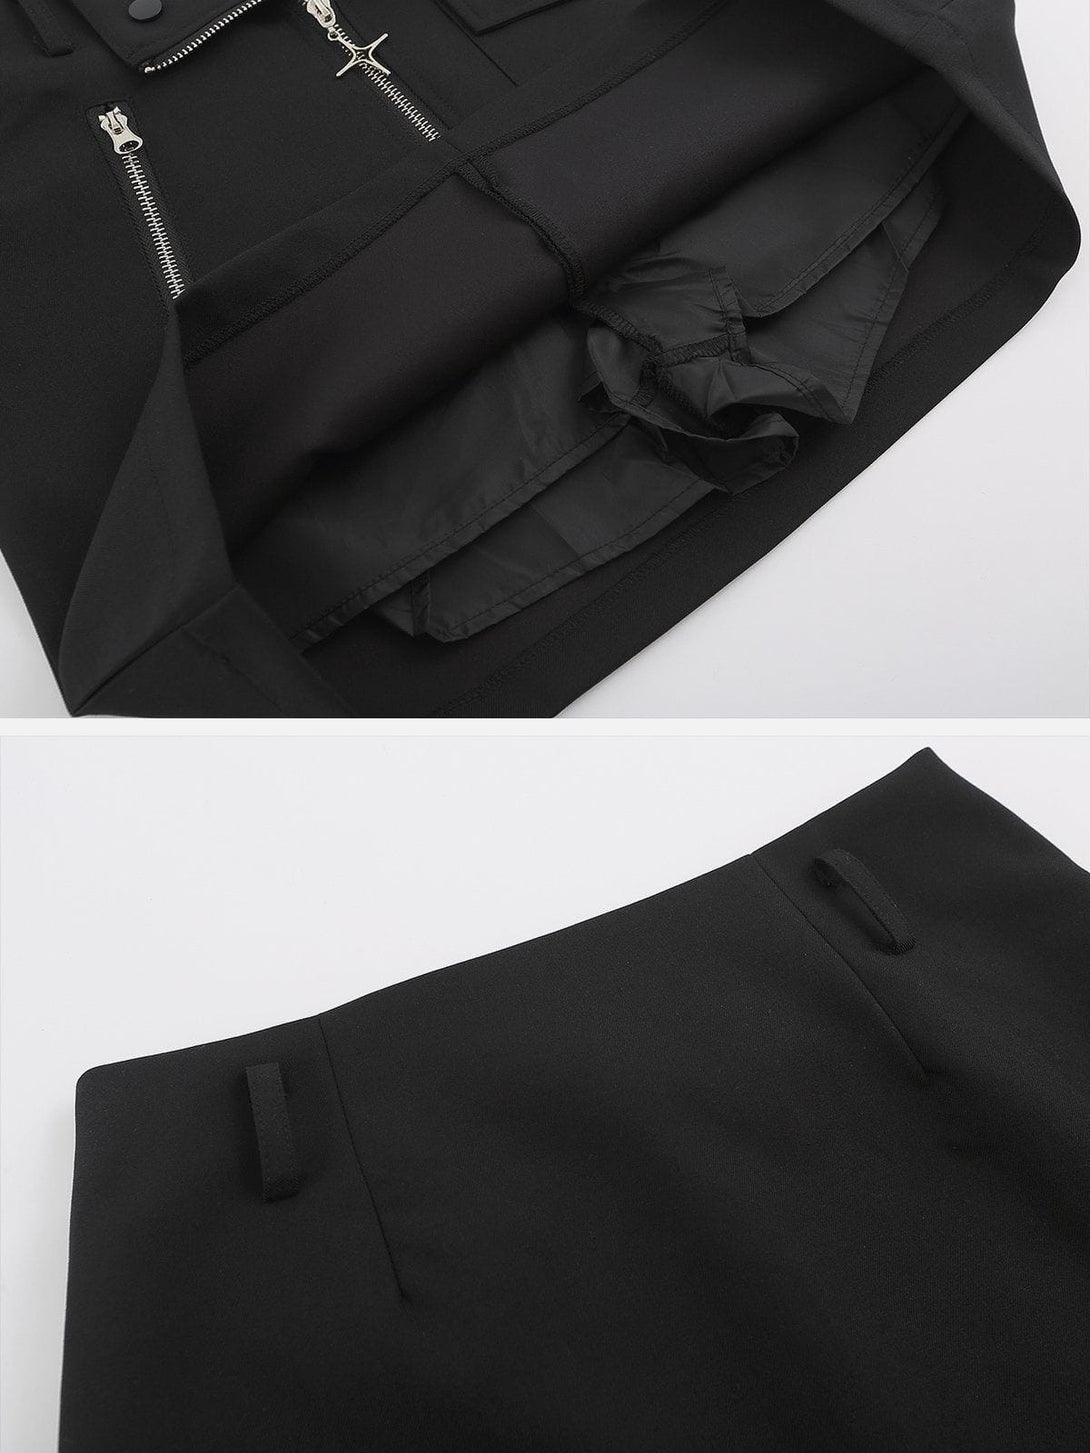 Majesda® - Vintage Navel Crop Zip Suit outfit ideas, streetwear fashion - majesda.com